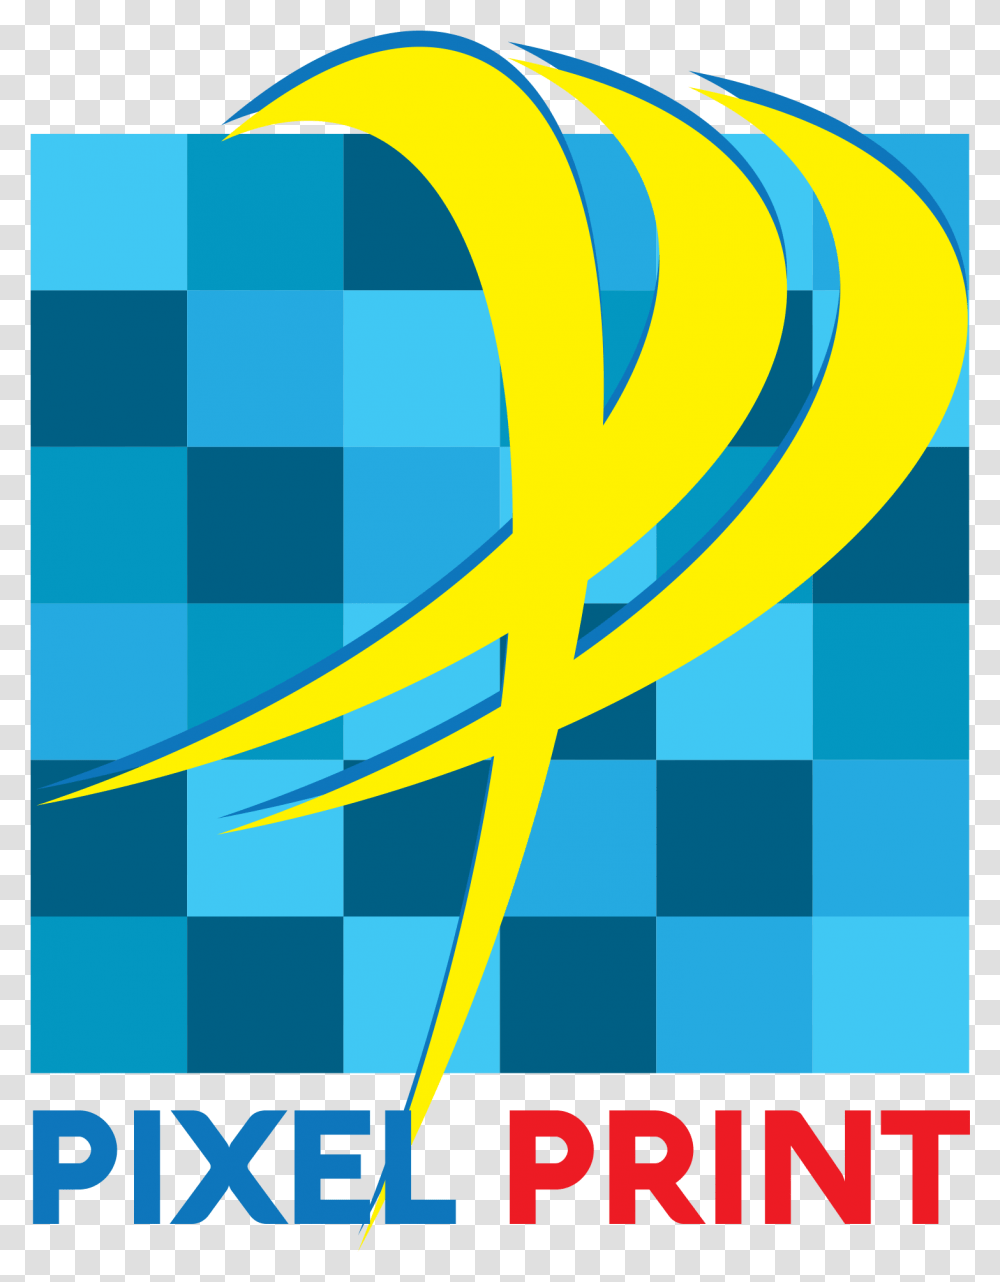 Pixel Print Shopping Bags Printing Designs, Outdoors, Nature Transparent Png